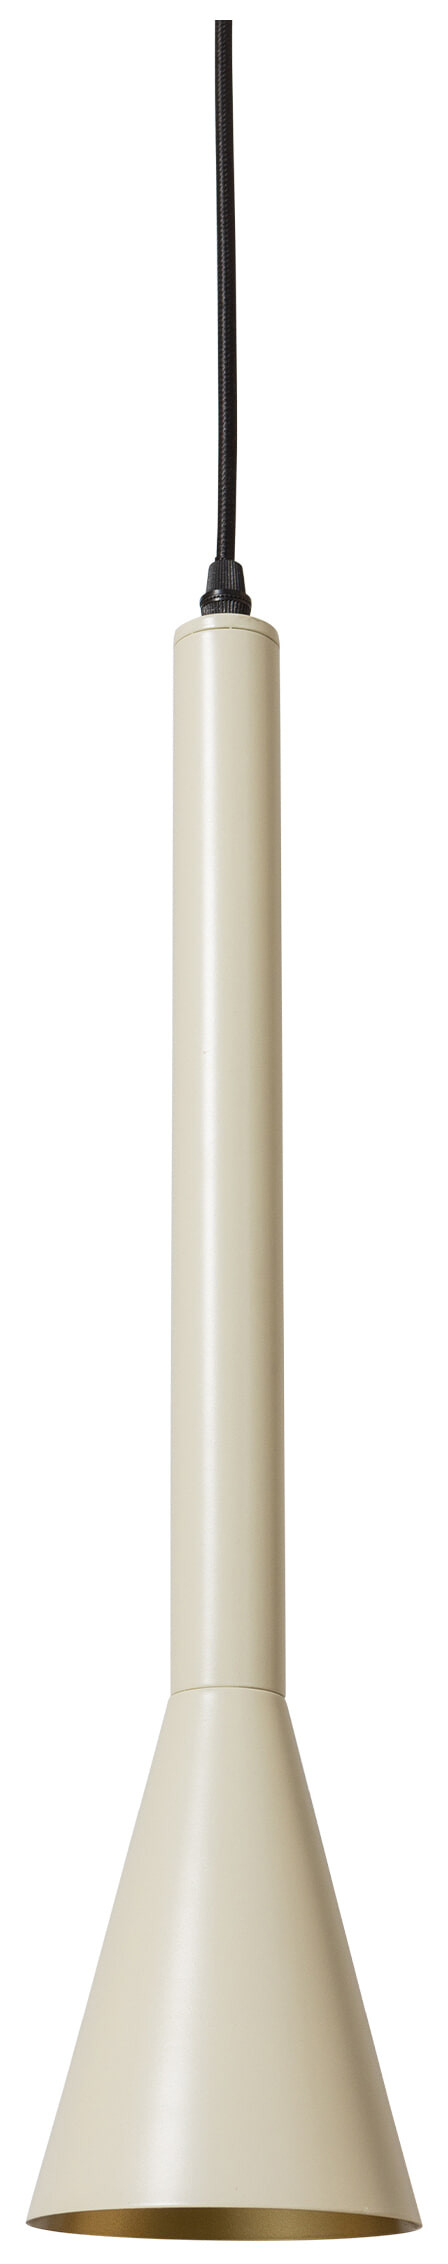 BePureHome Hanglamp 'Body' 45cm hoog, kleur Zand